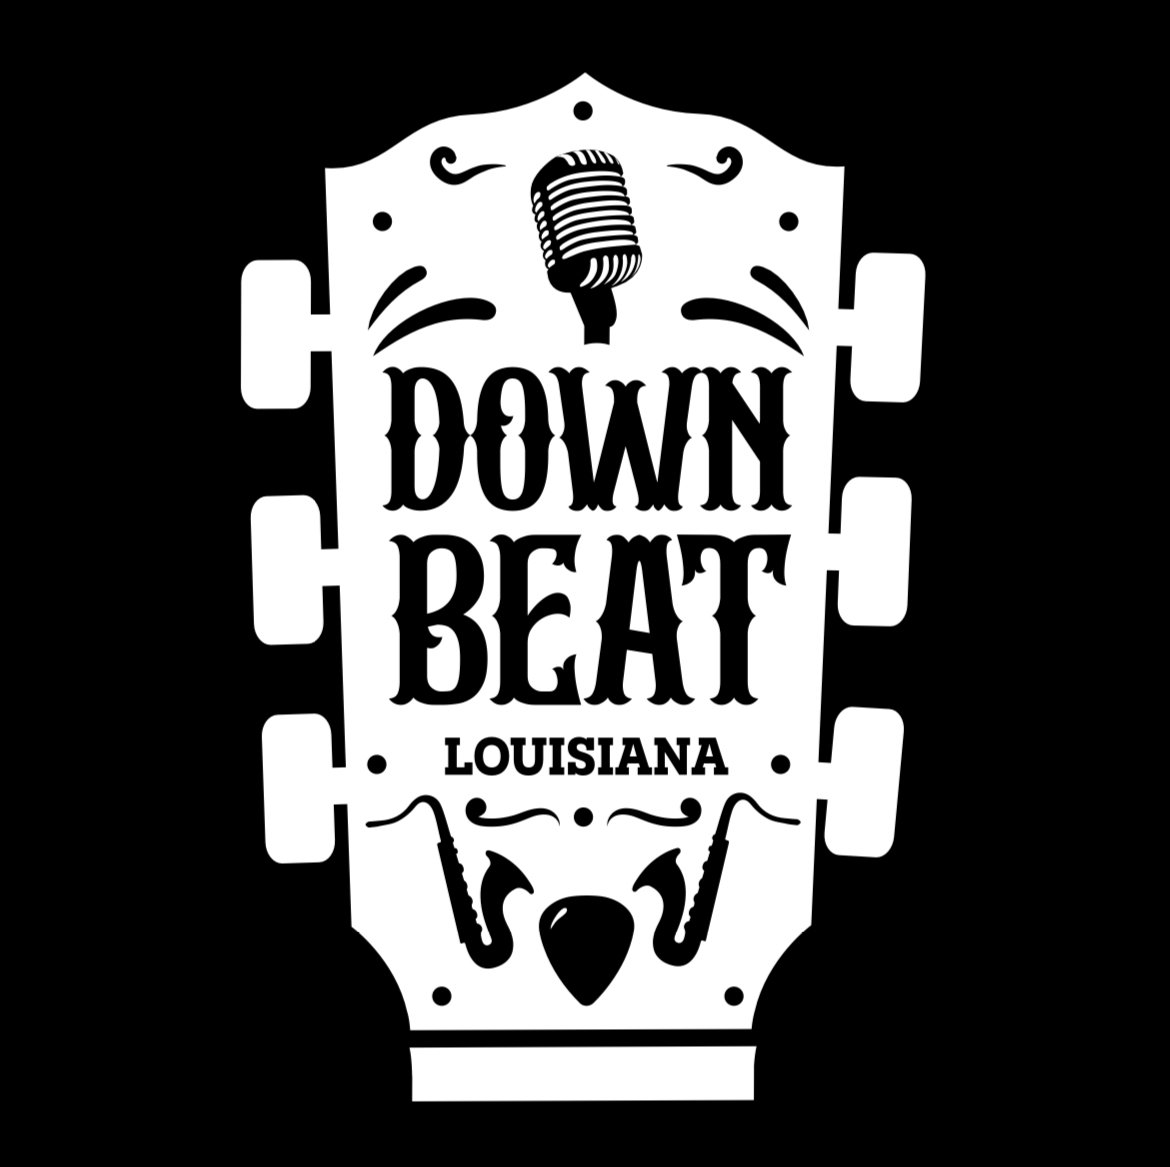 Downbeat Louisiana